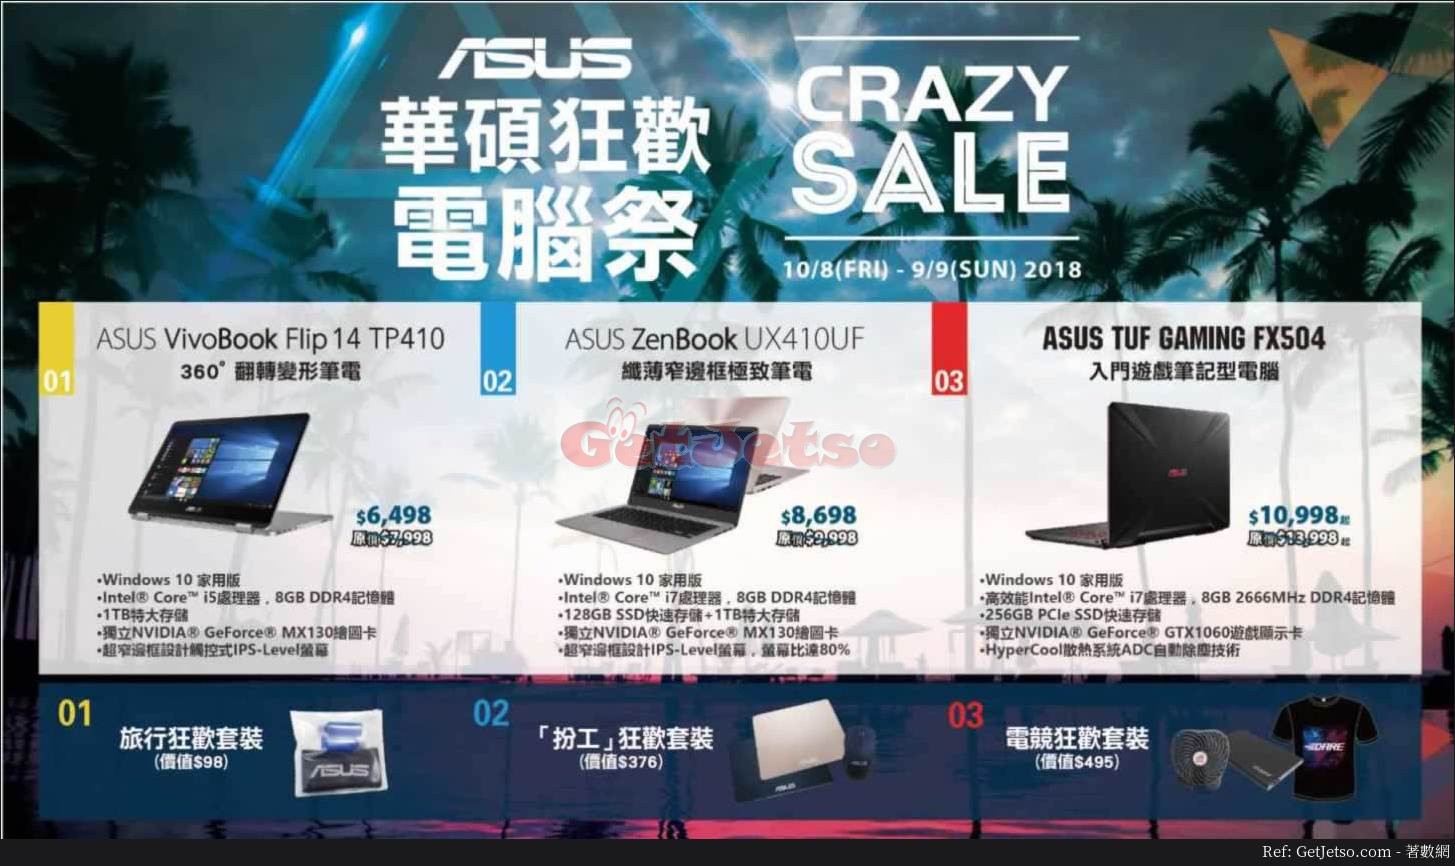 ASUS 華碩電腦Crazy Sale優惠(18年8月10-9月9日)圖片1